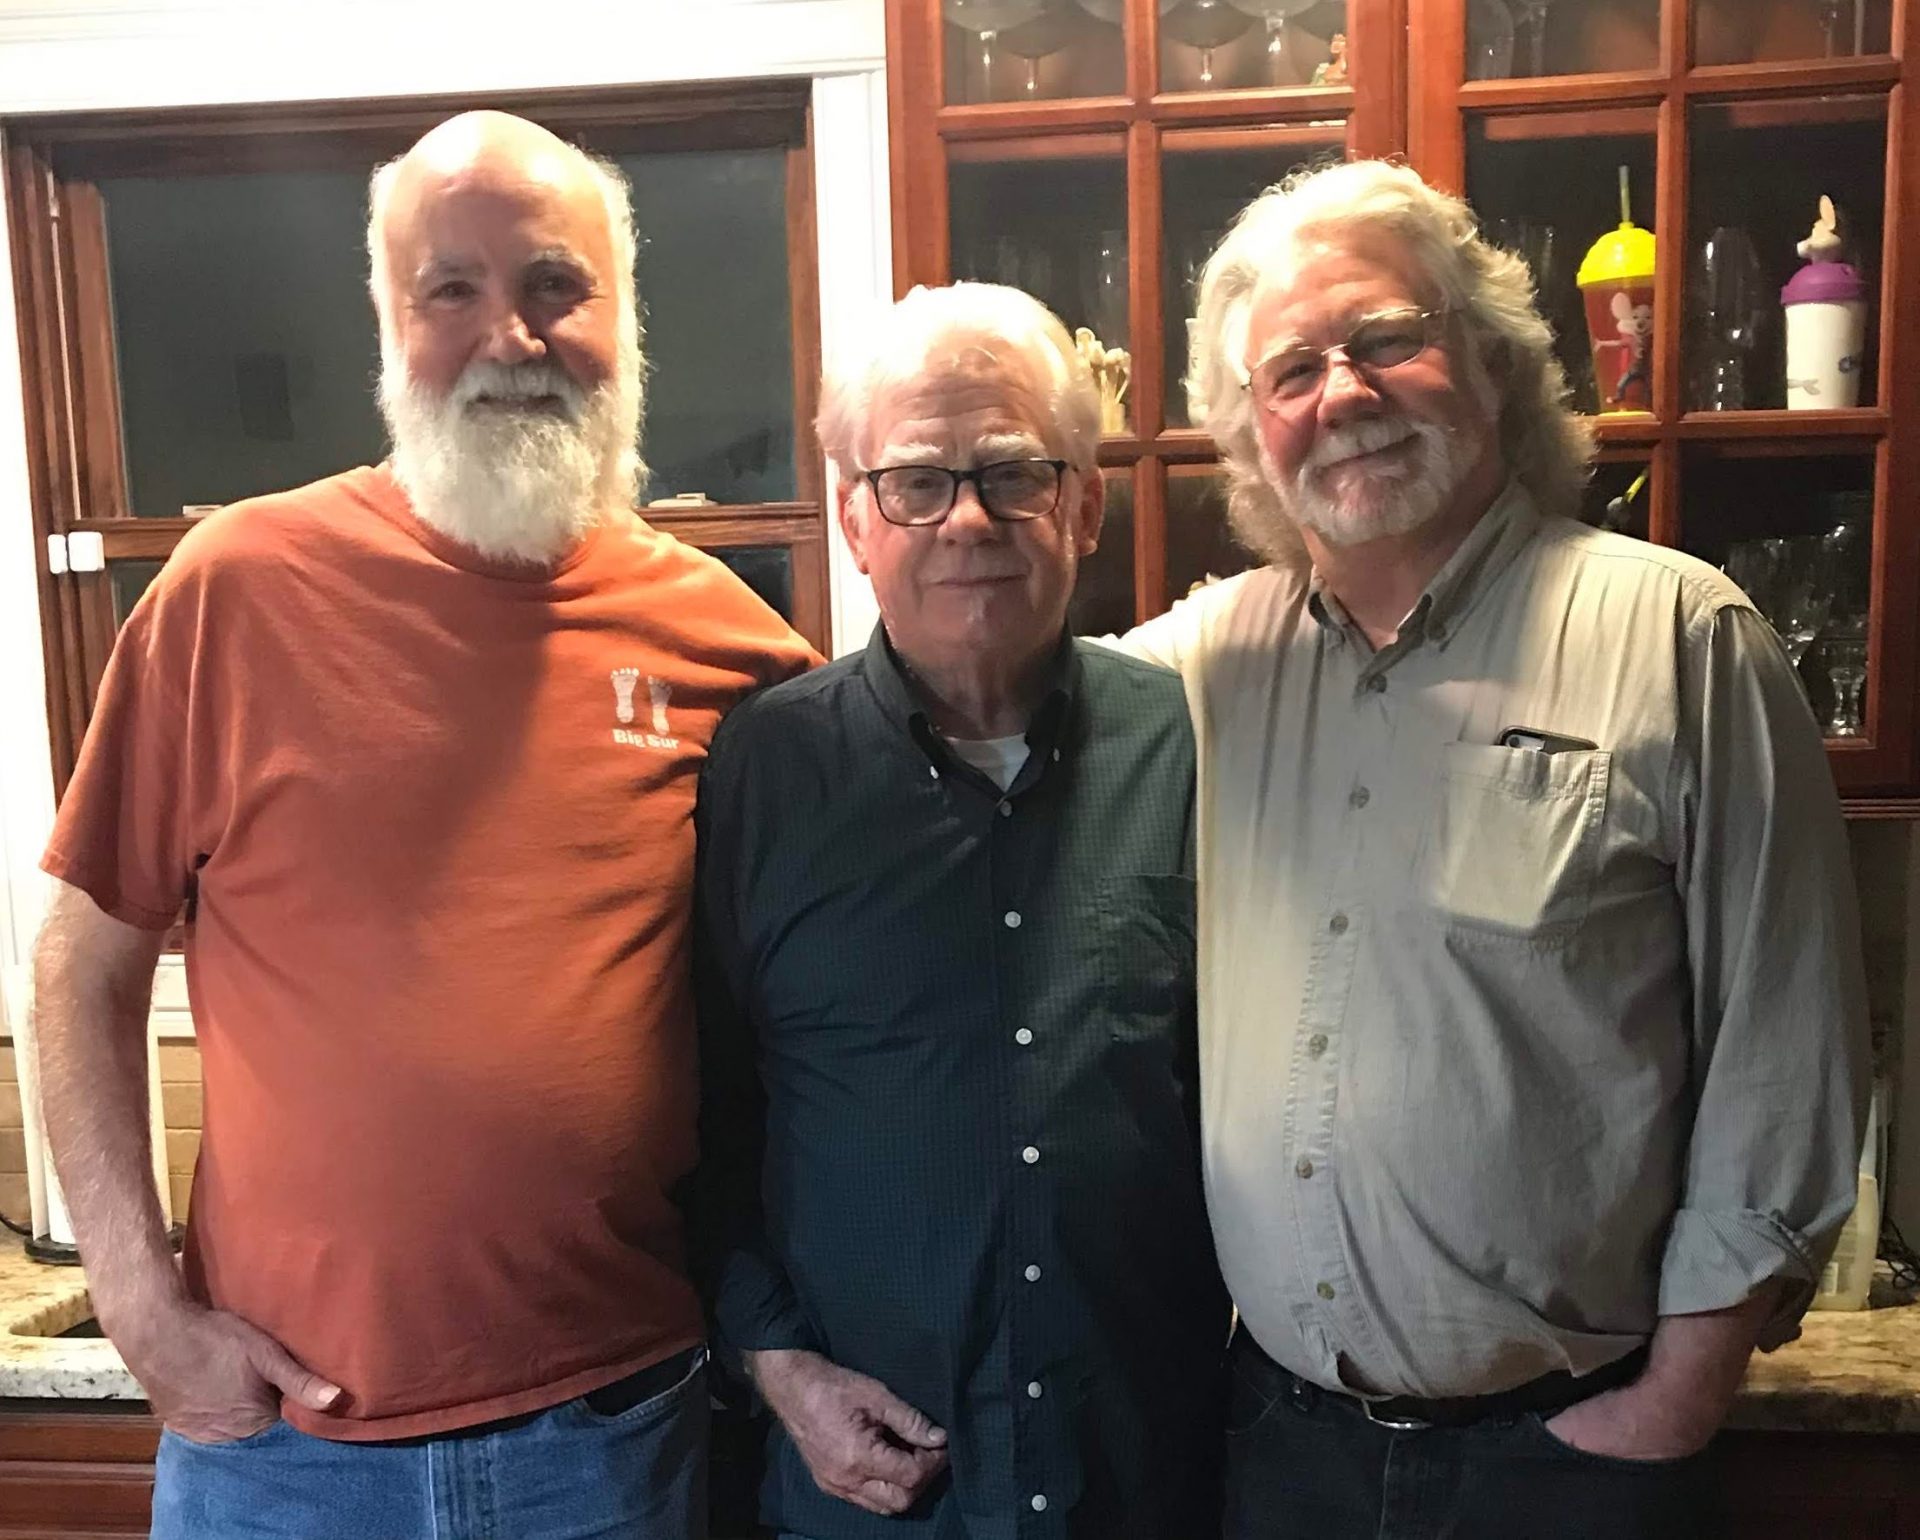 Dave Duncan, Hank Gill & Bob Rial, New Jersey, October 22, 2019